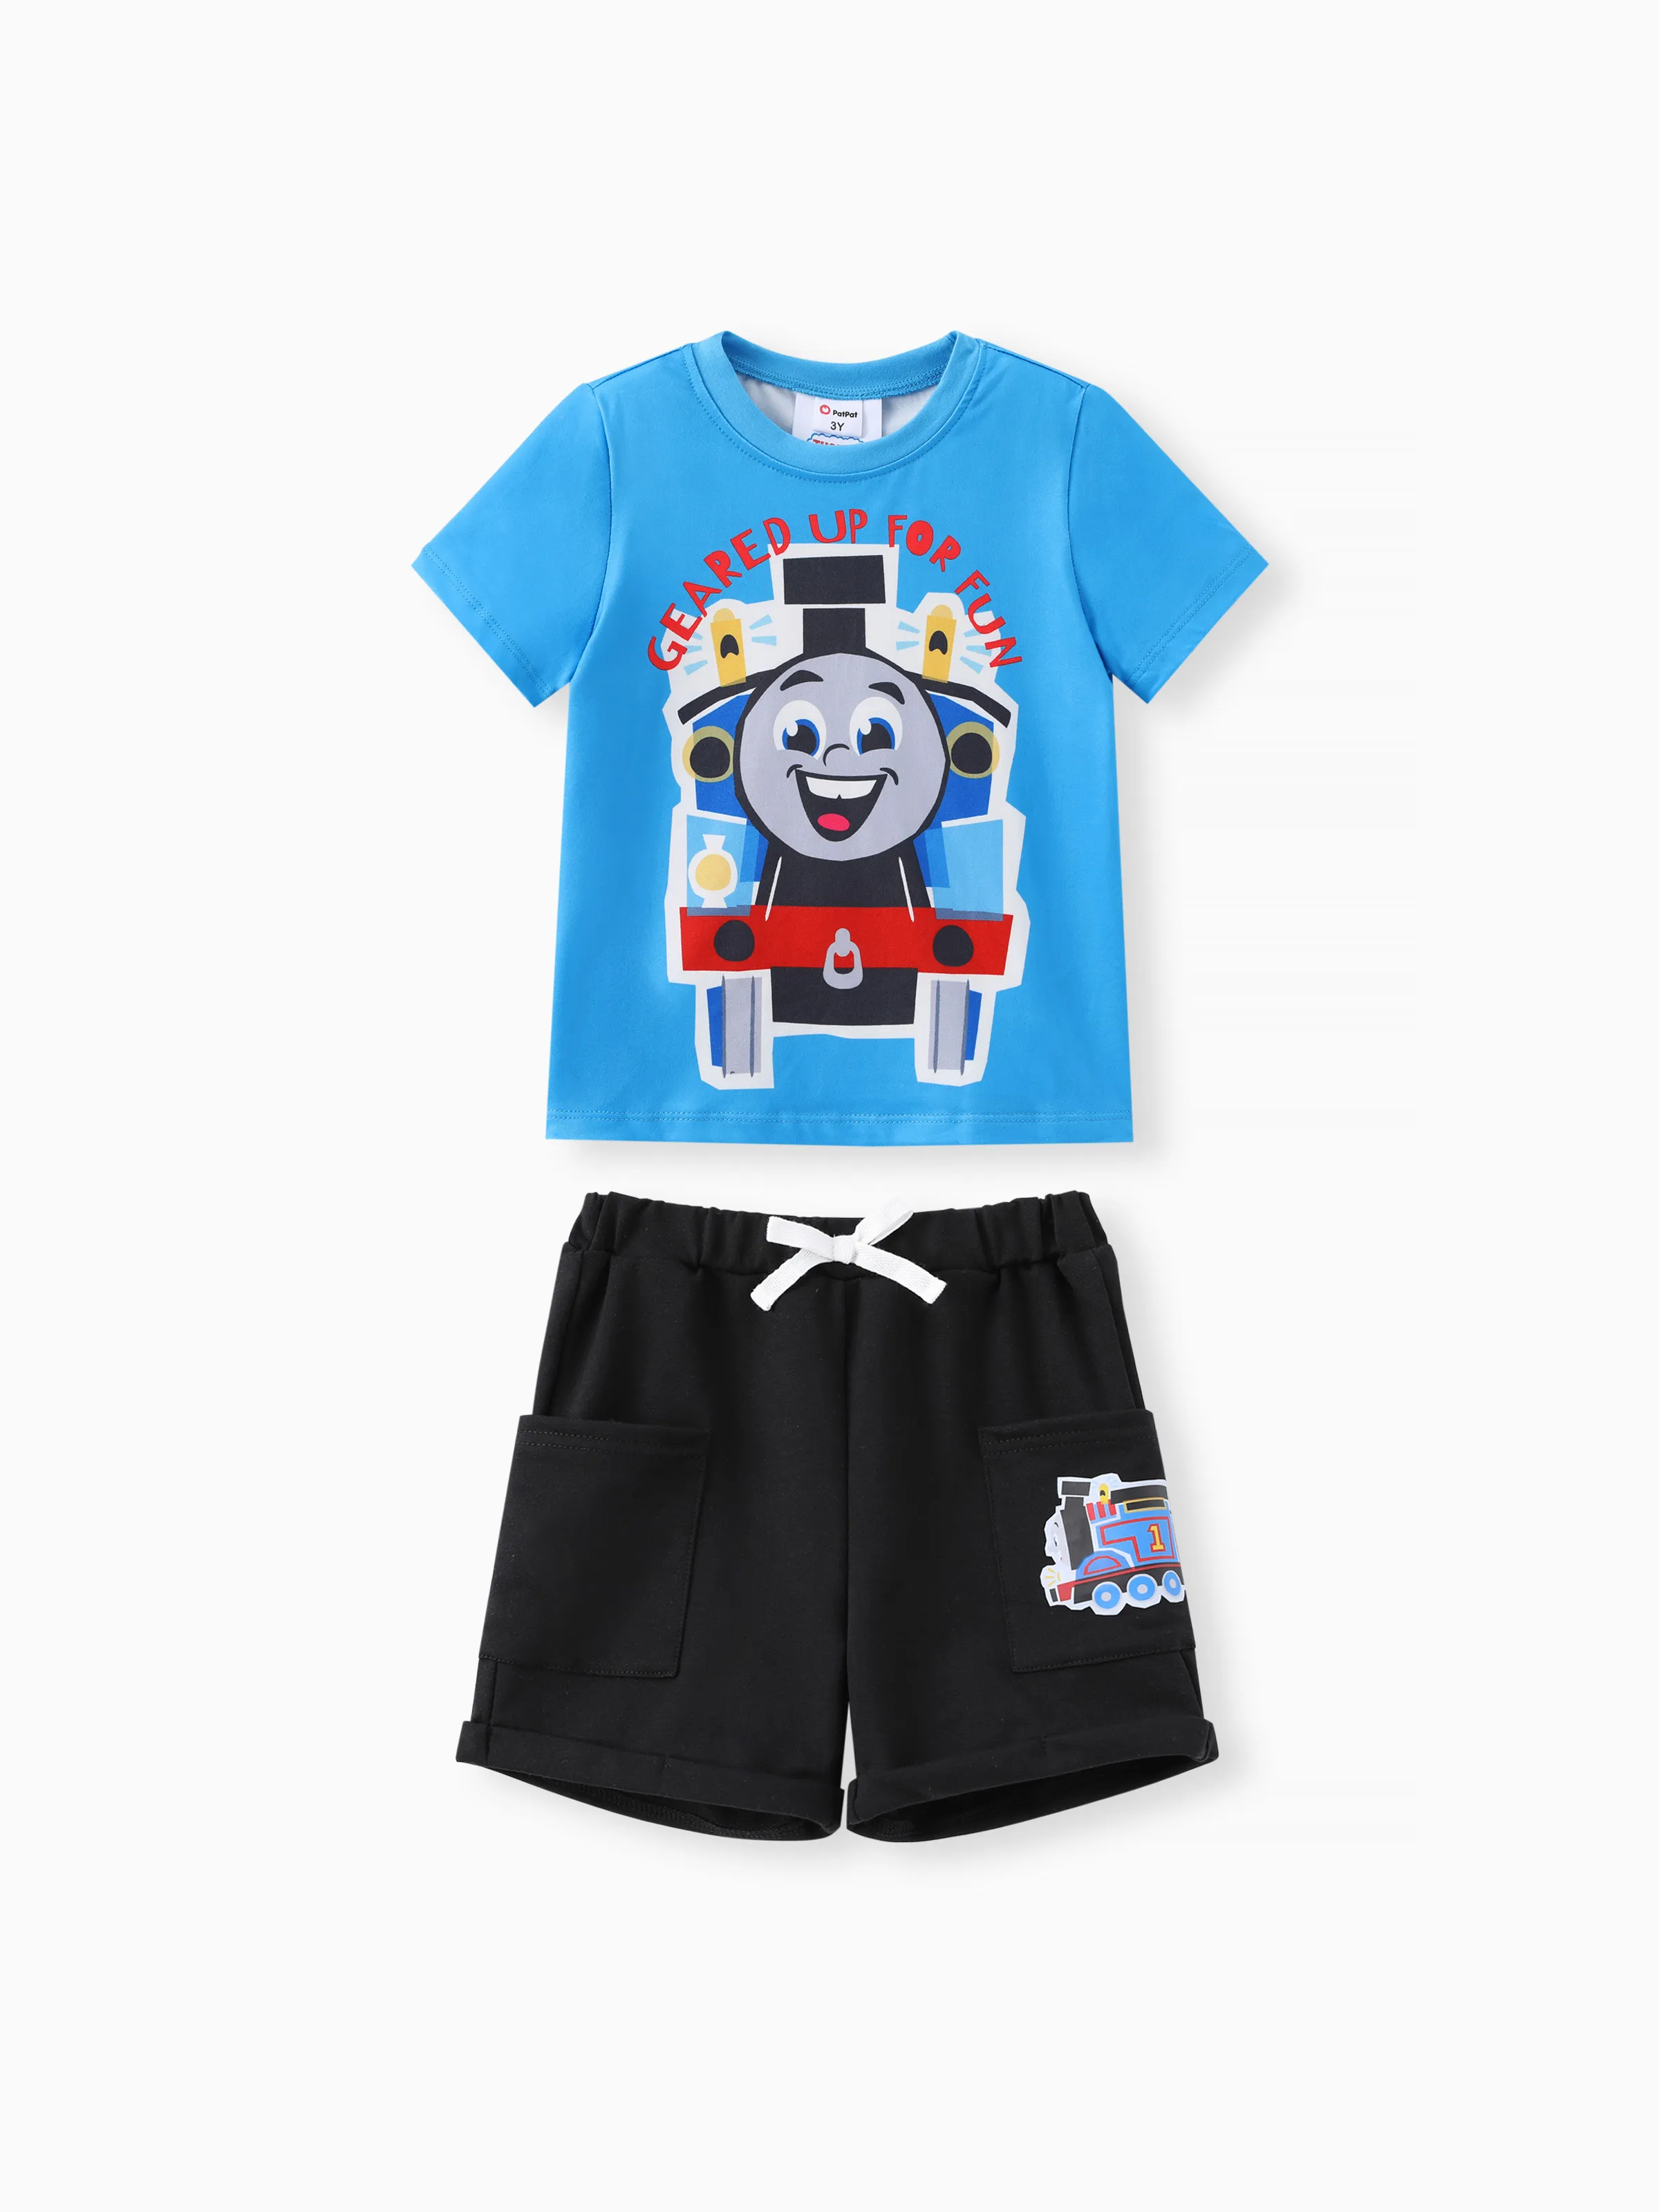 

Thomas & Friends Toddler Boys 2pcs Character Print Tee with Shorts Set